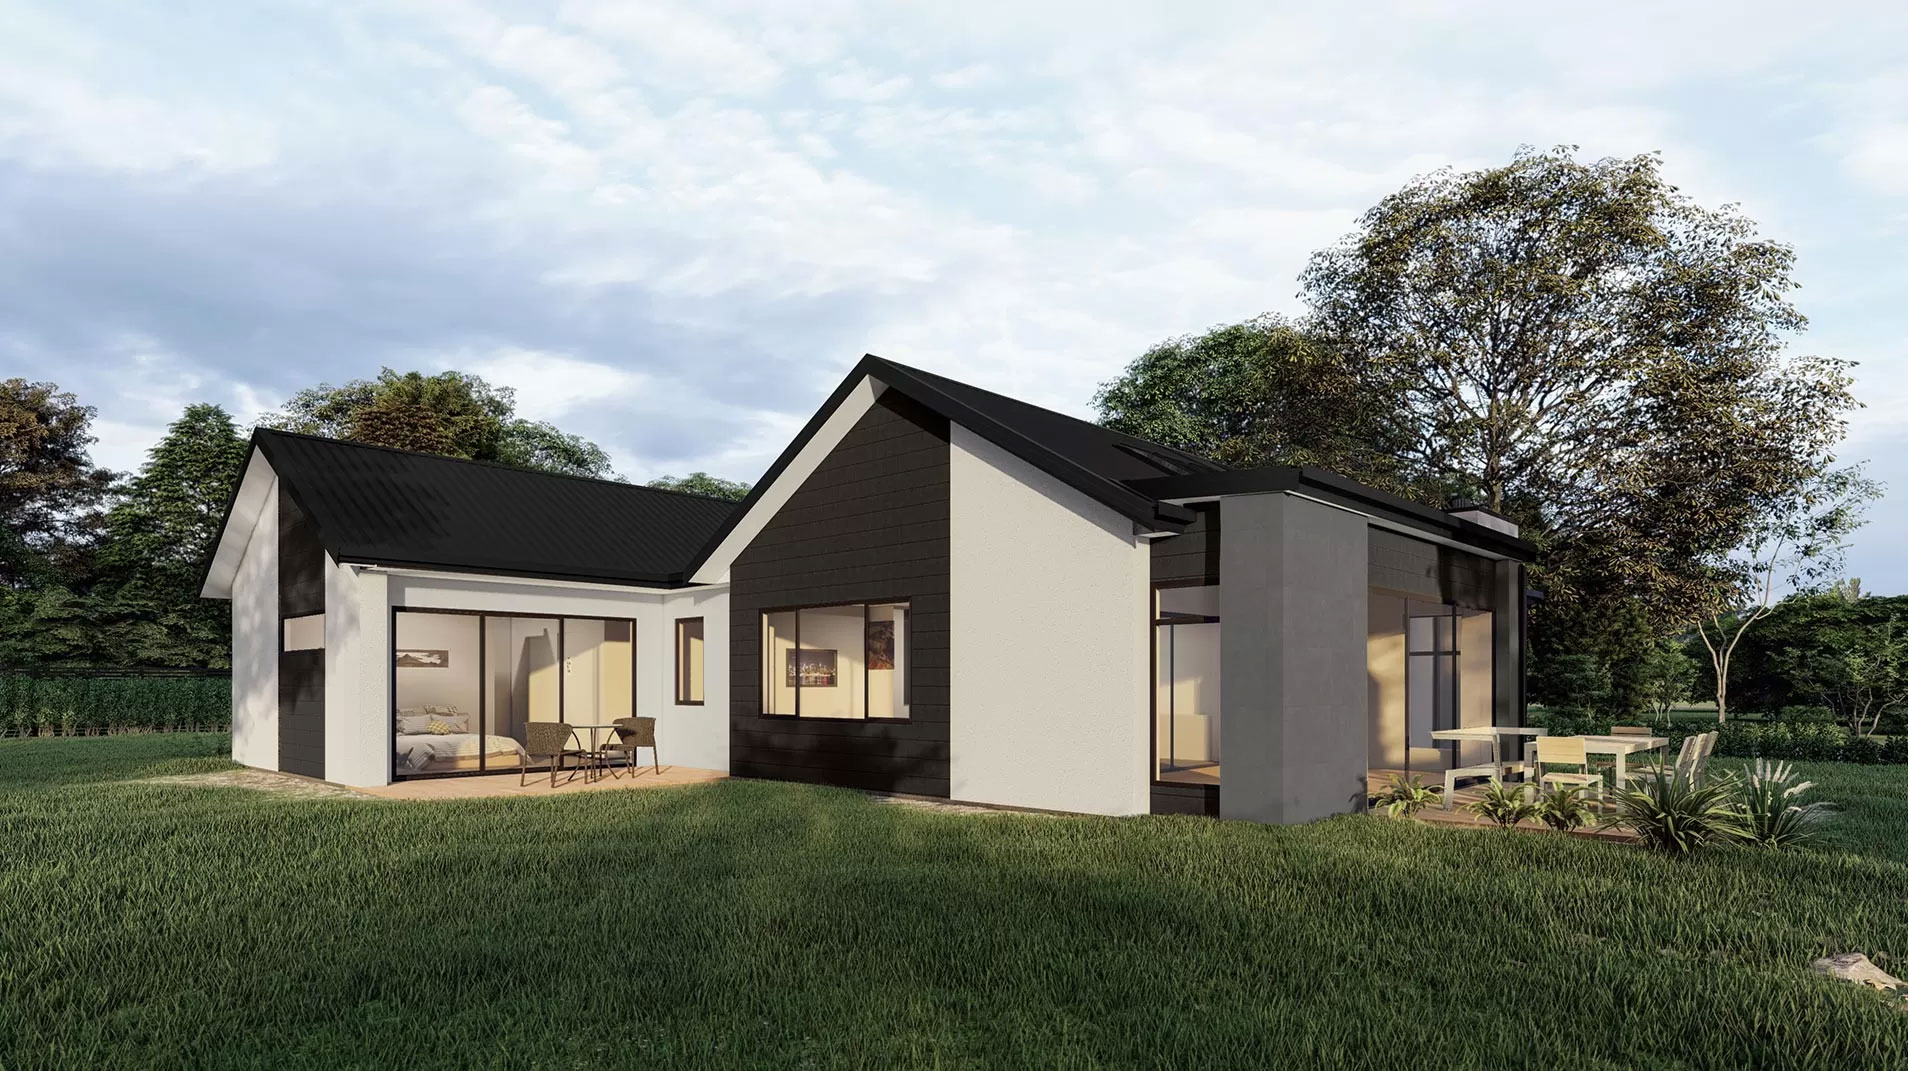 Lincoln House Plan Back View - Hallmark Homes Christchurch Canterbury New Zealand